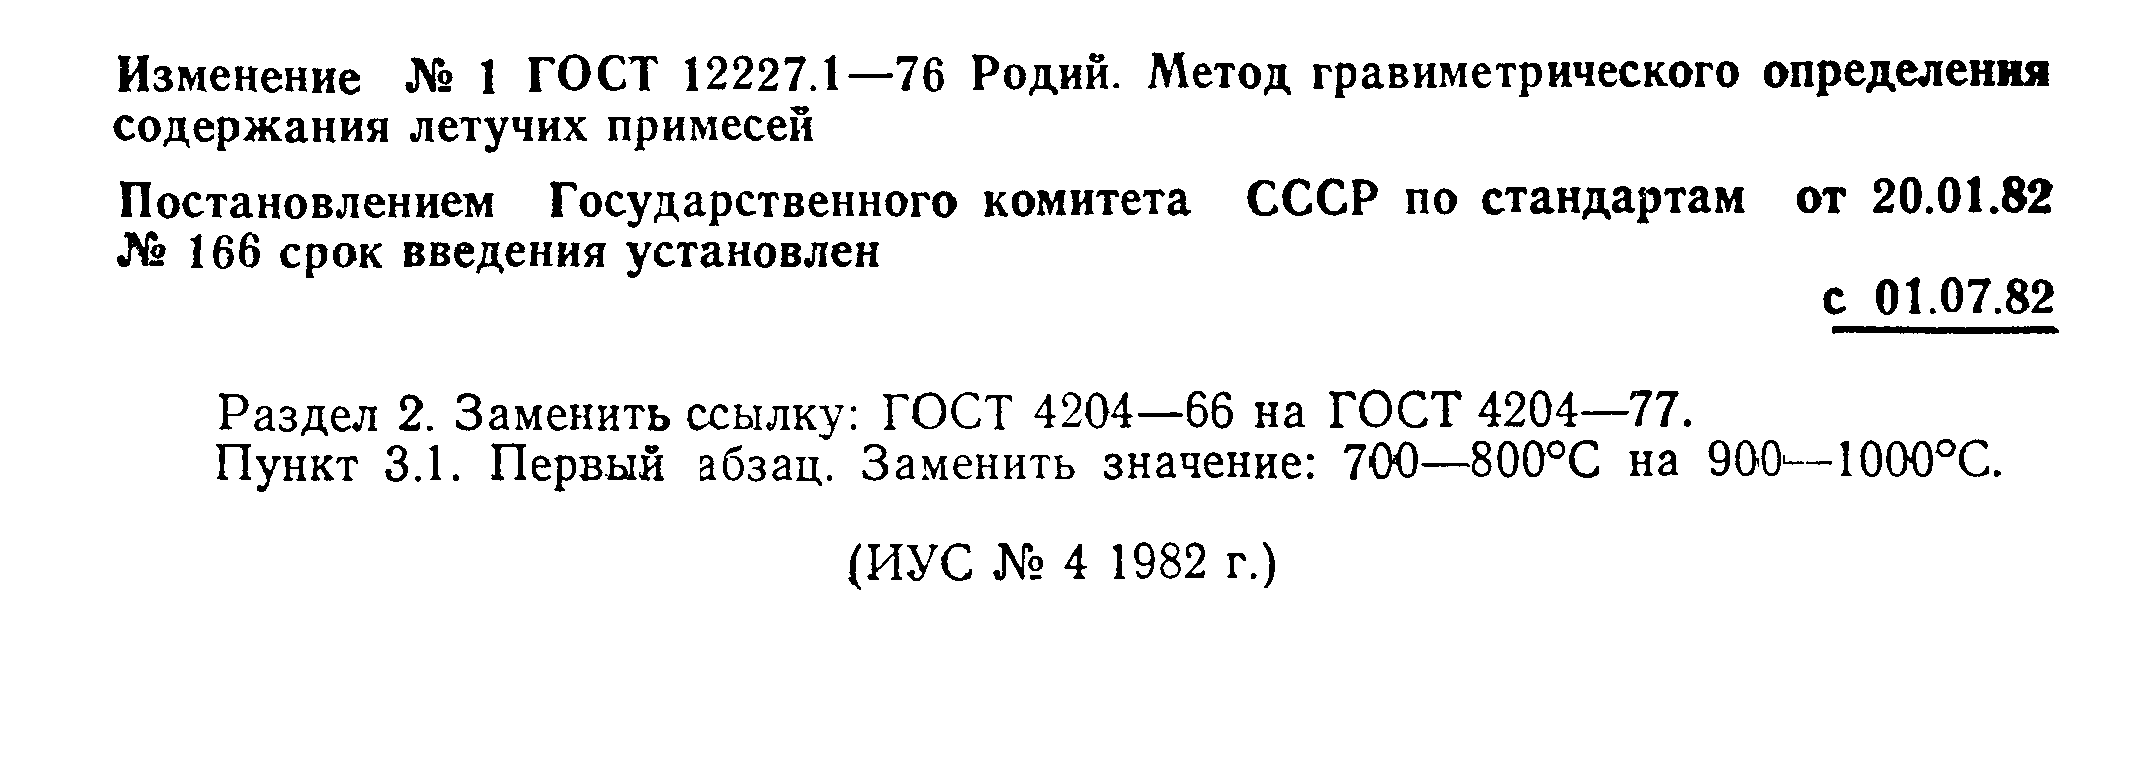 ГОСТ 12227.1-76